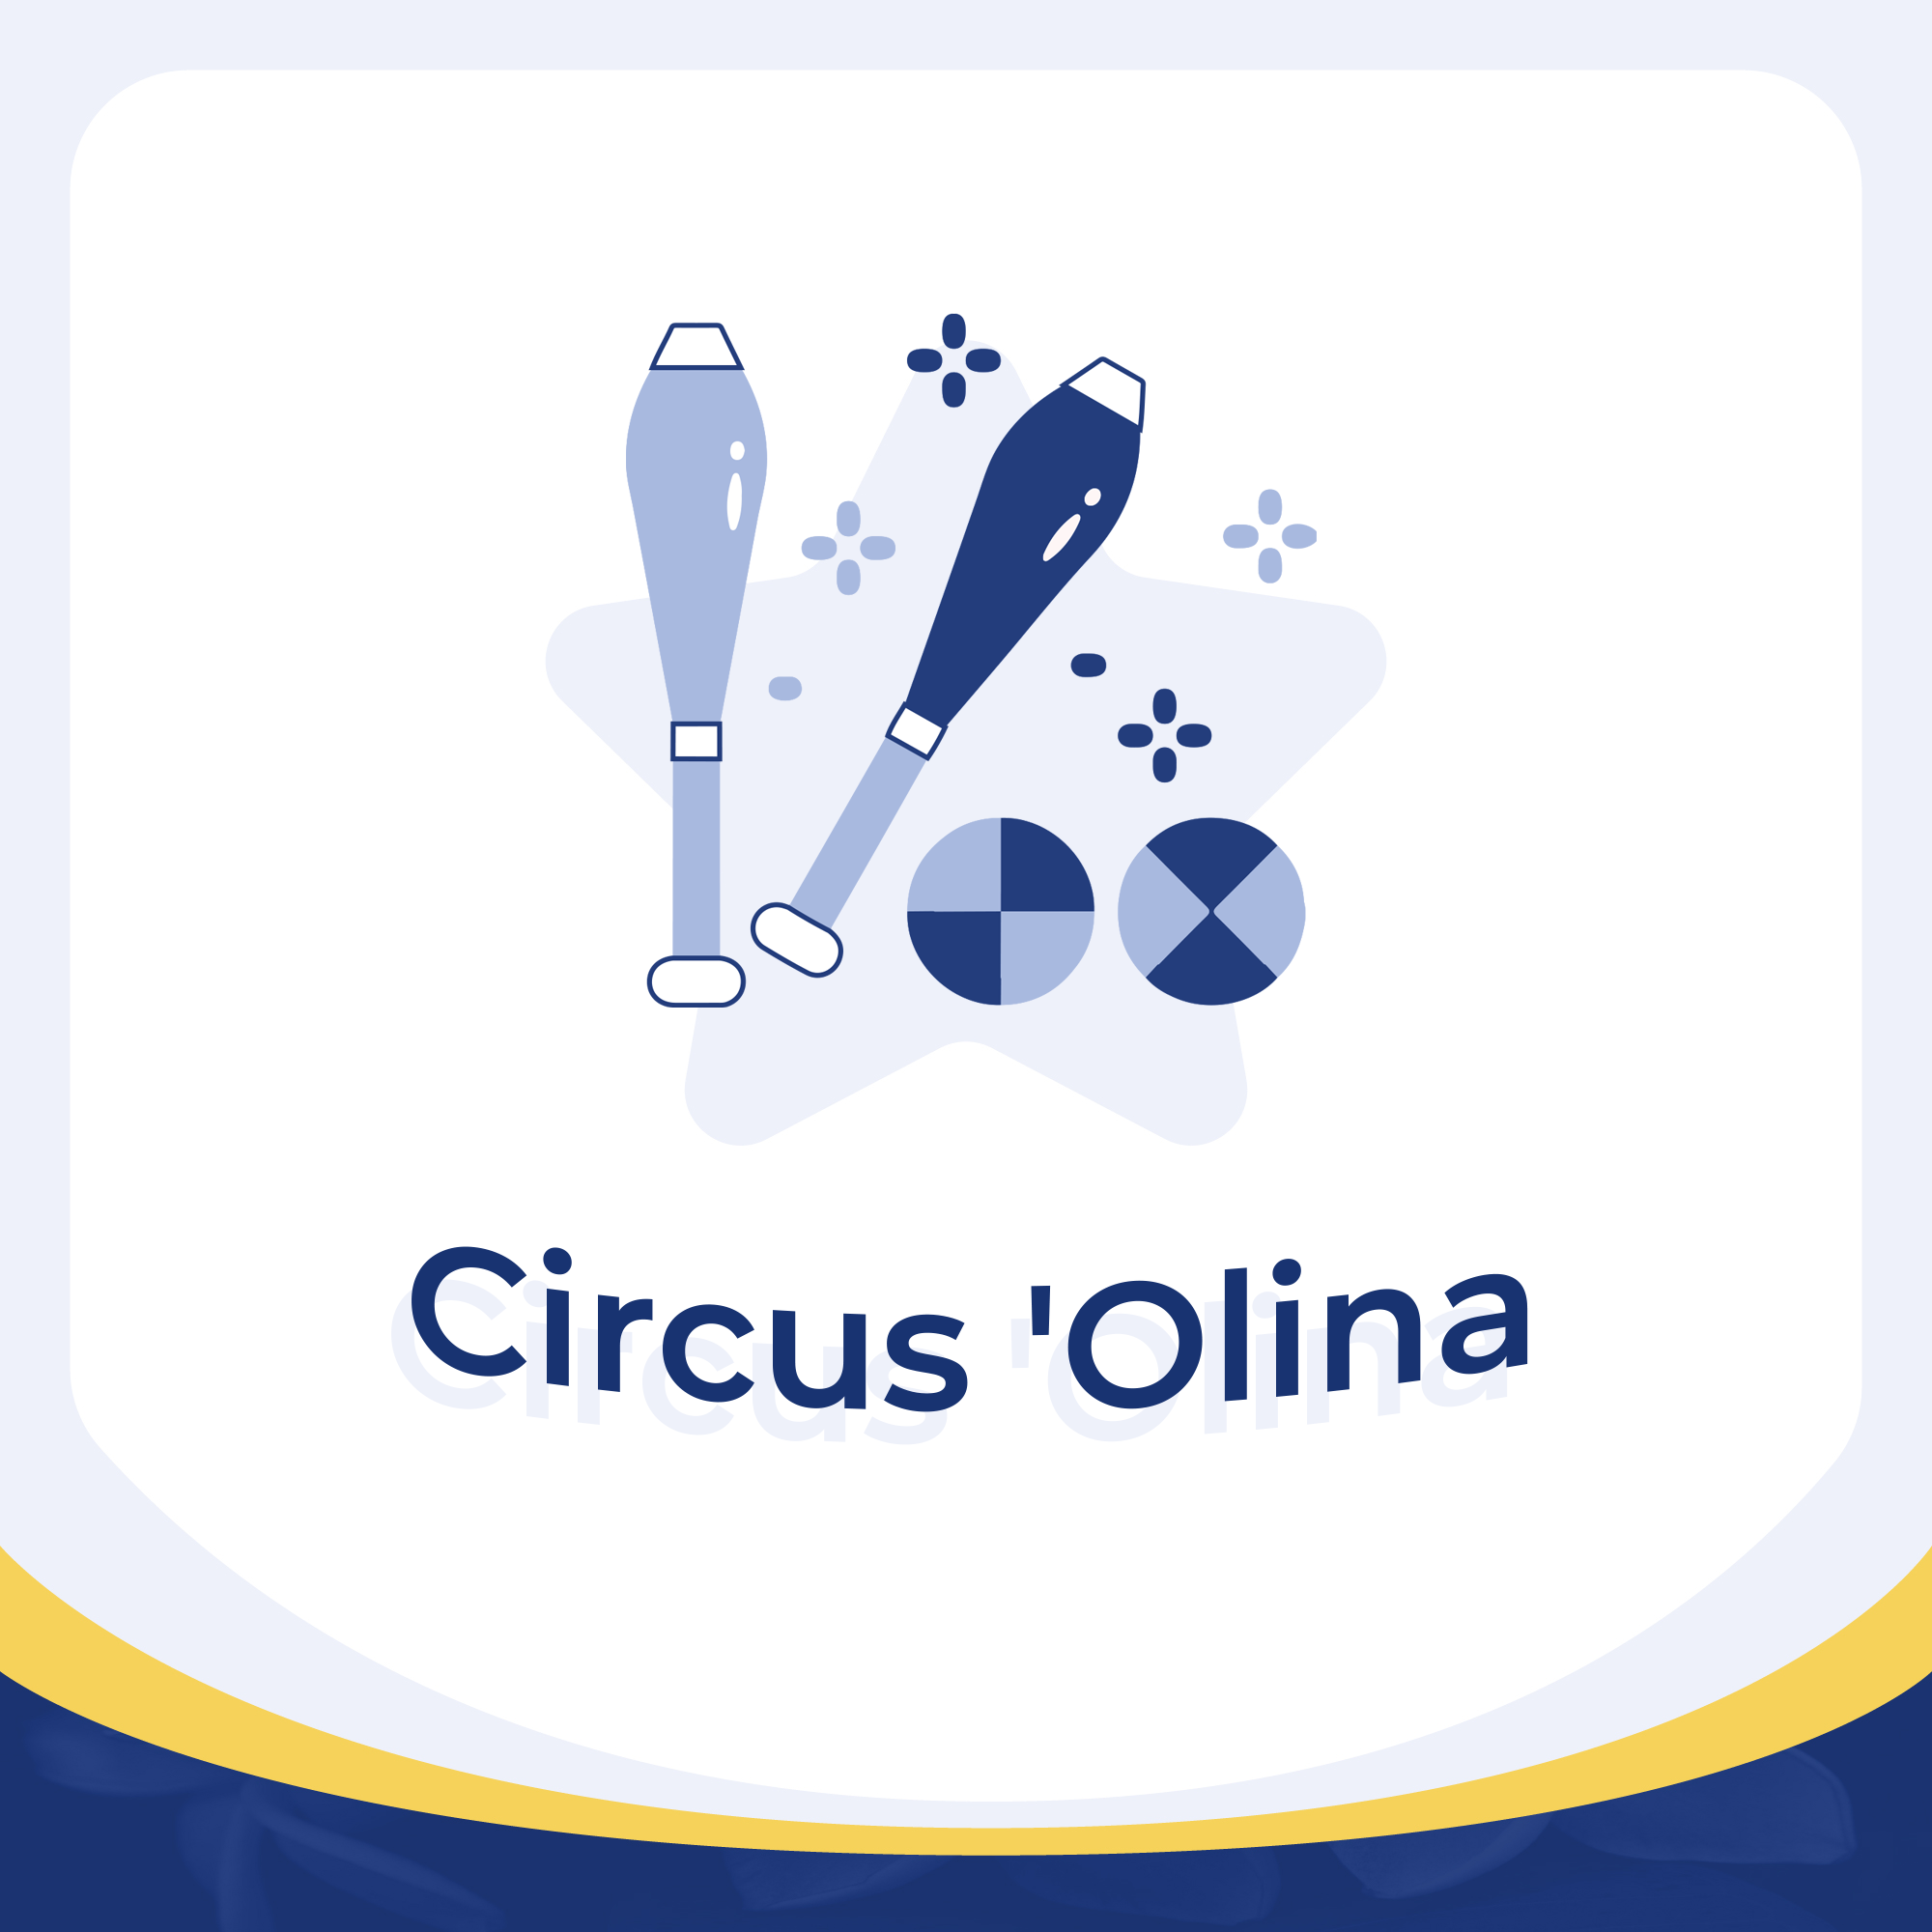 Circus Olina